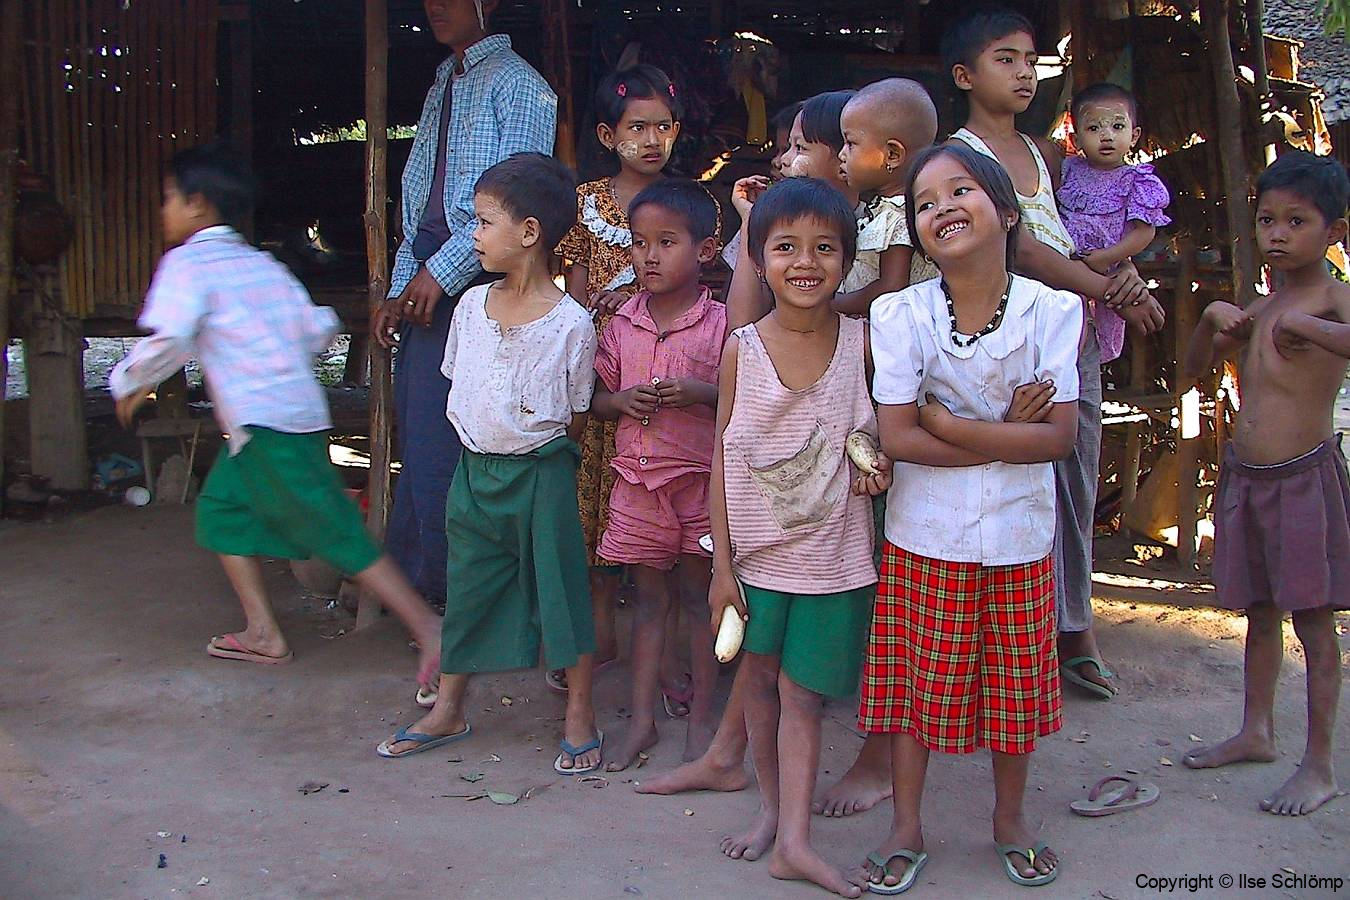 Myanmar, Sri Ksetra, Besuch eines Dorfes